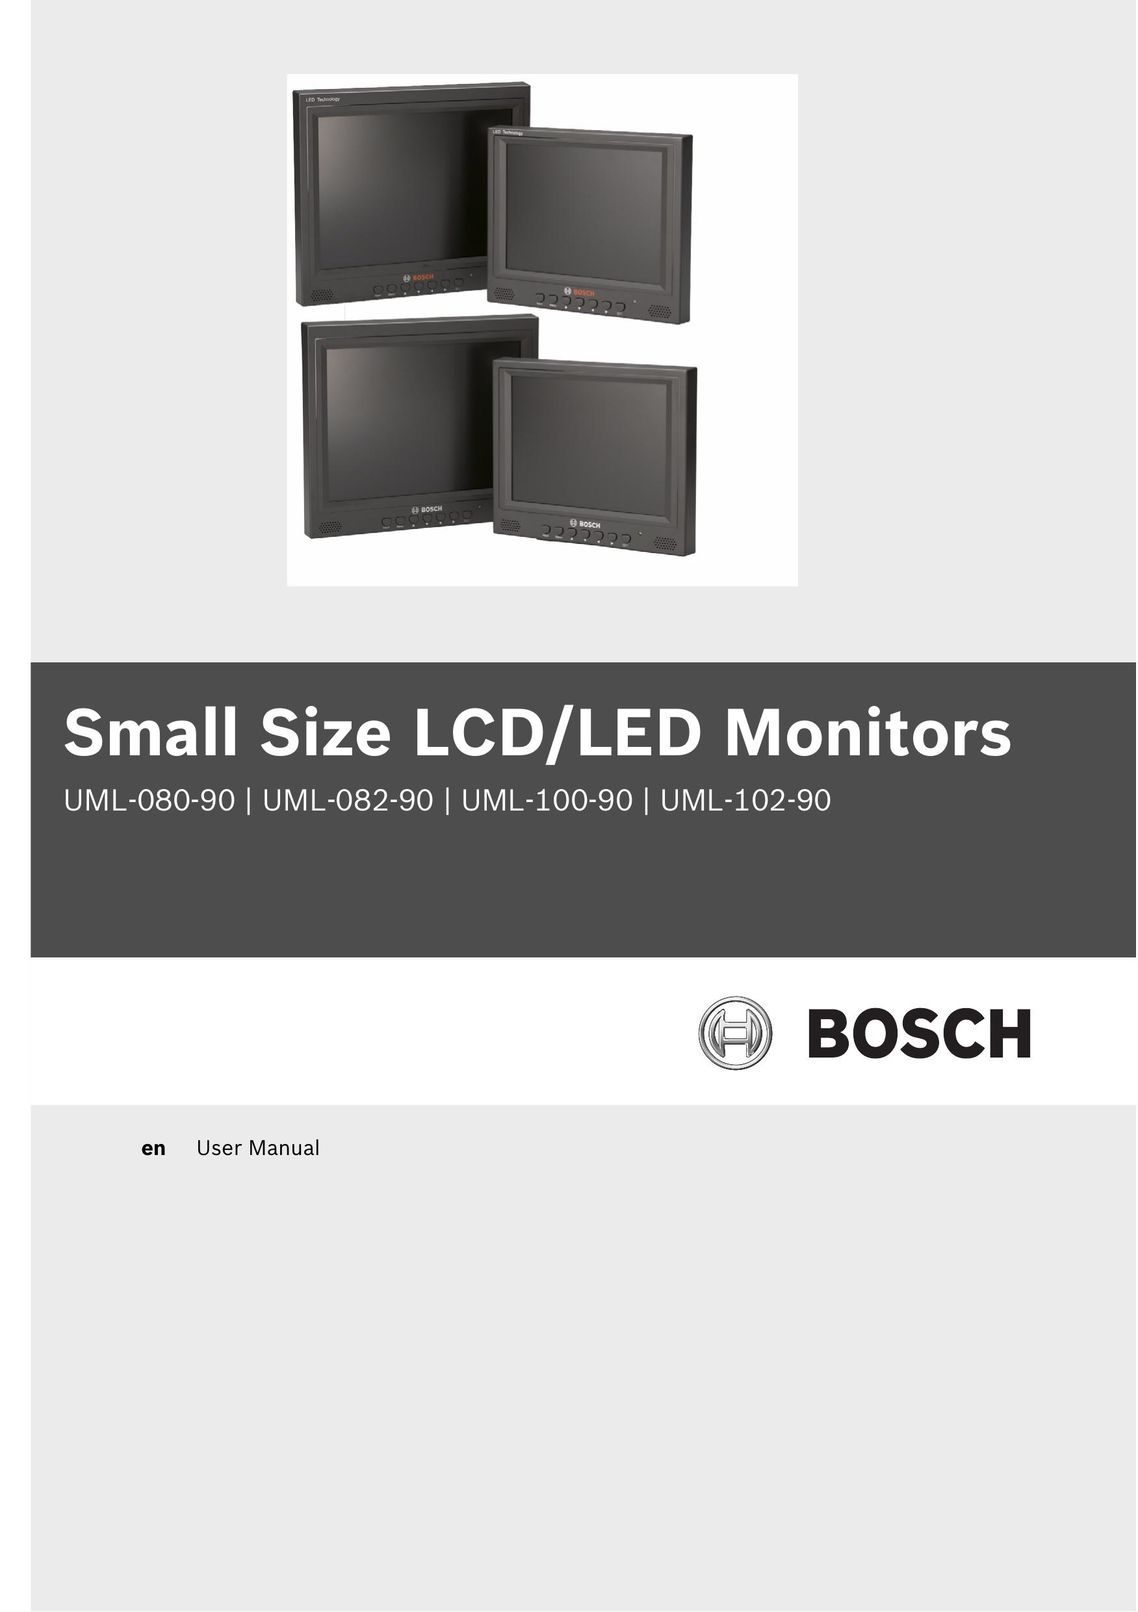 Bosch Appliances UML-102-90 Computer Monitor User Manual